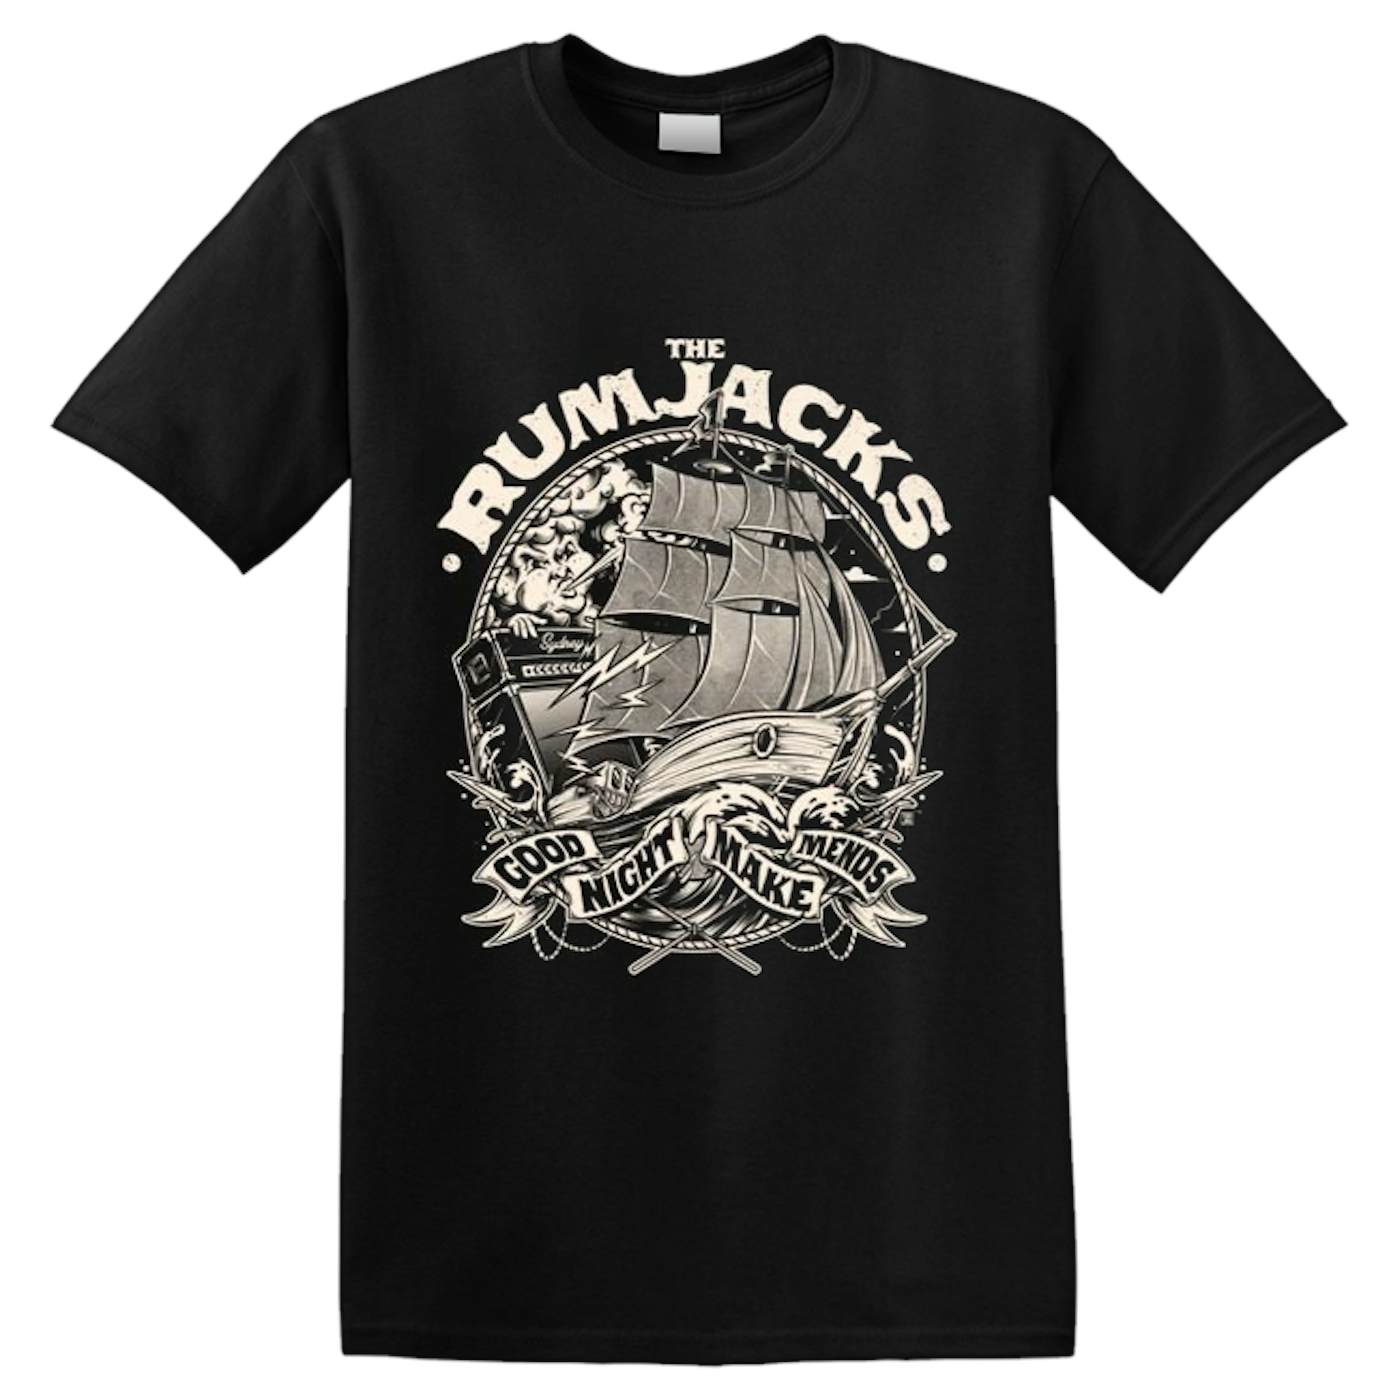 THE RUMJACKS - 'Ship' T-Shirt